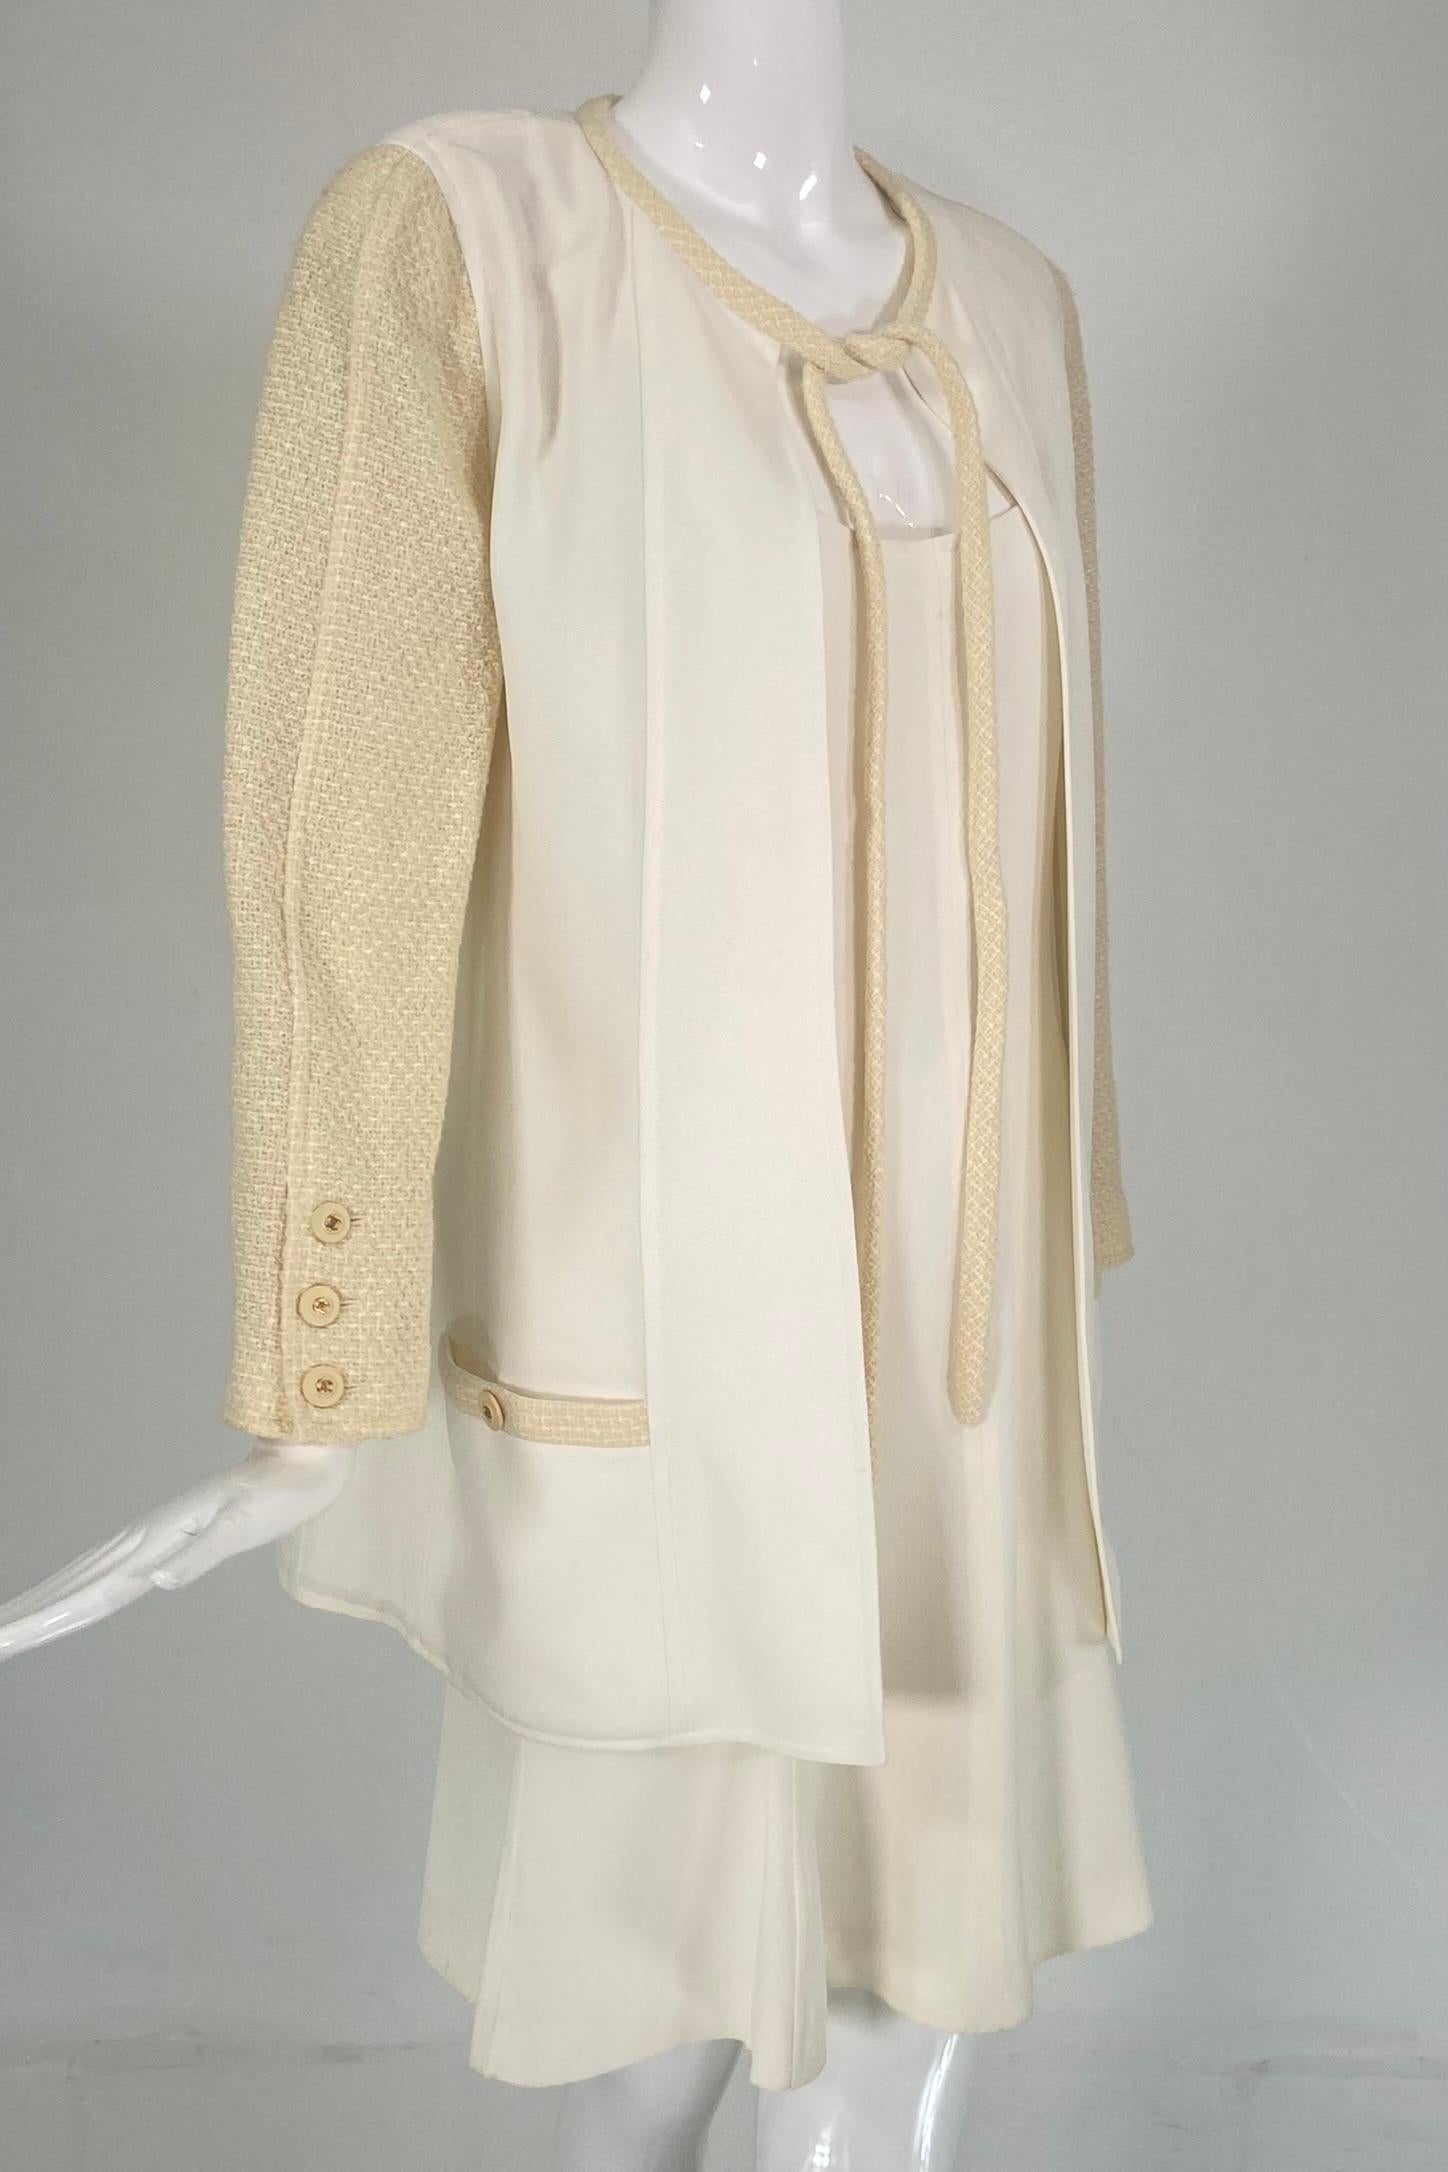 Chanel Off White Two Piece Spaghetti Strap Sun Dress & Tweed Jacket 1994E 8